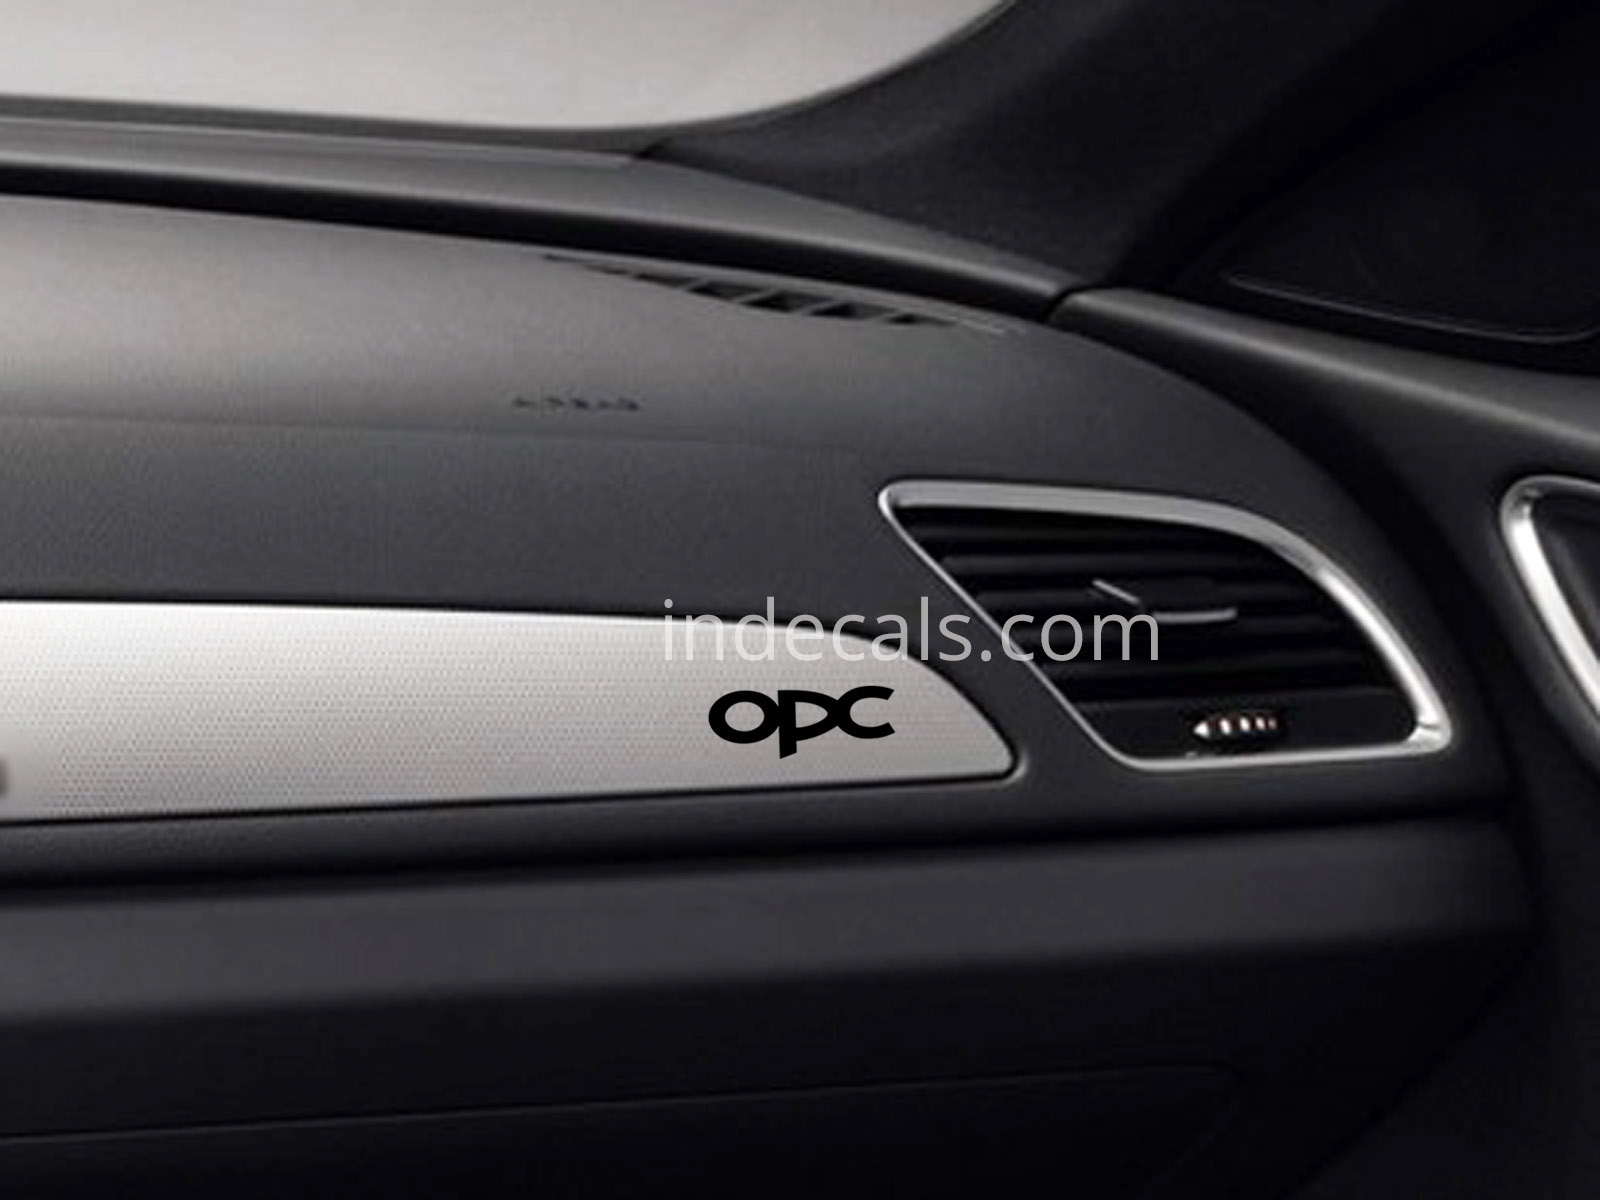 3 x Opel OPC Stickers for Dash Trim - Black